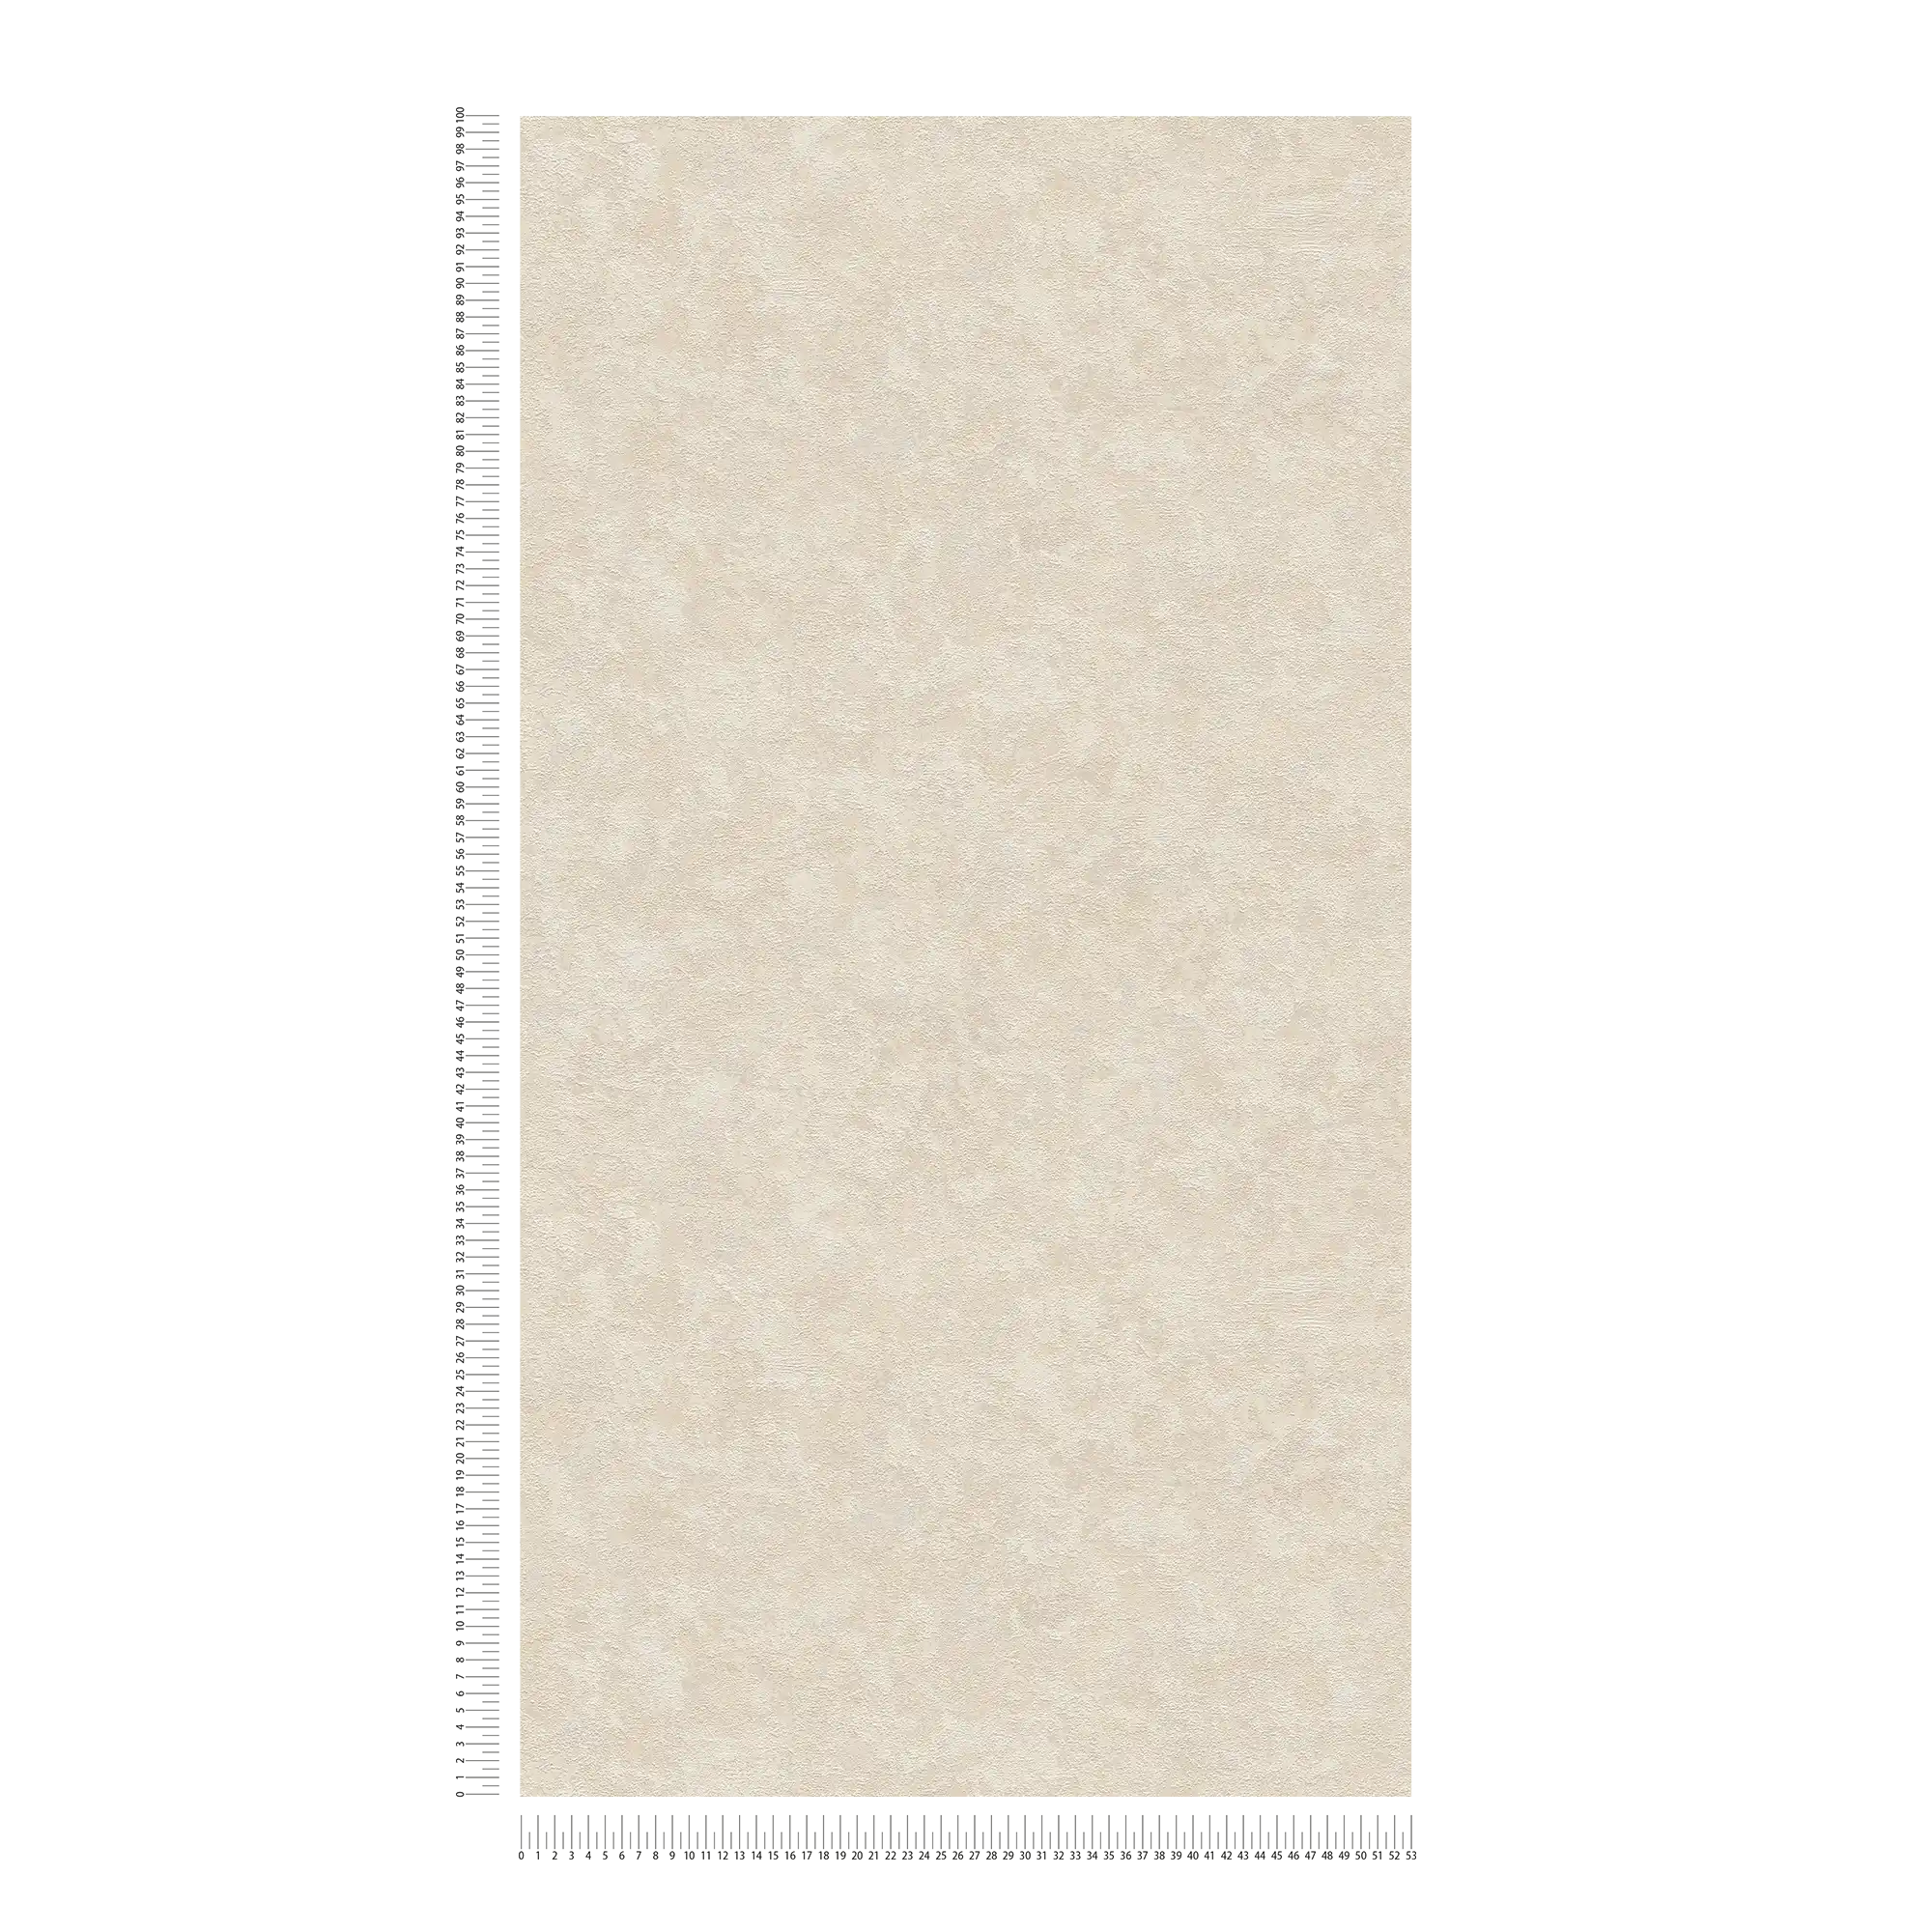             papel pintado texturizado liso moteado - beige, marrón
        